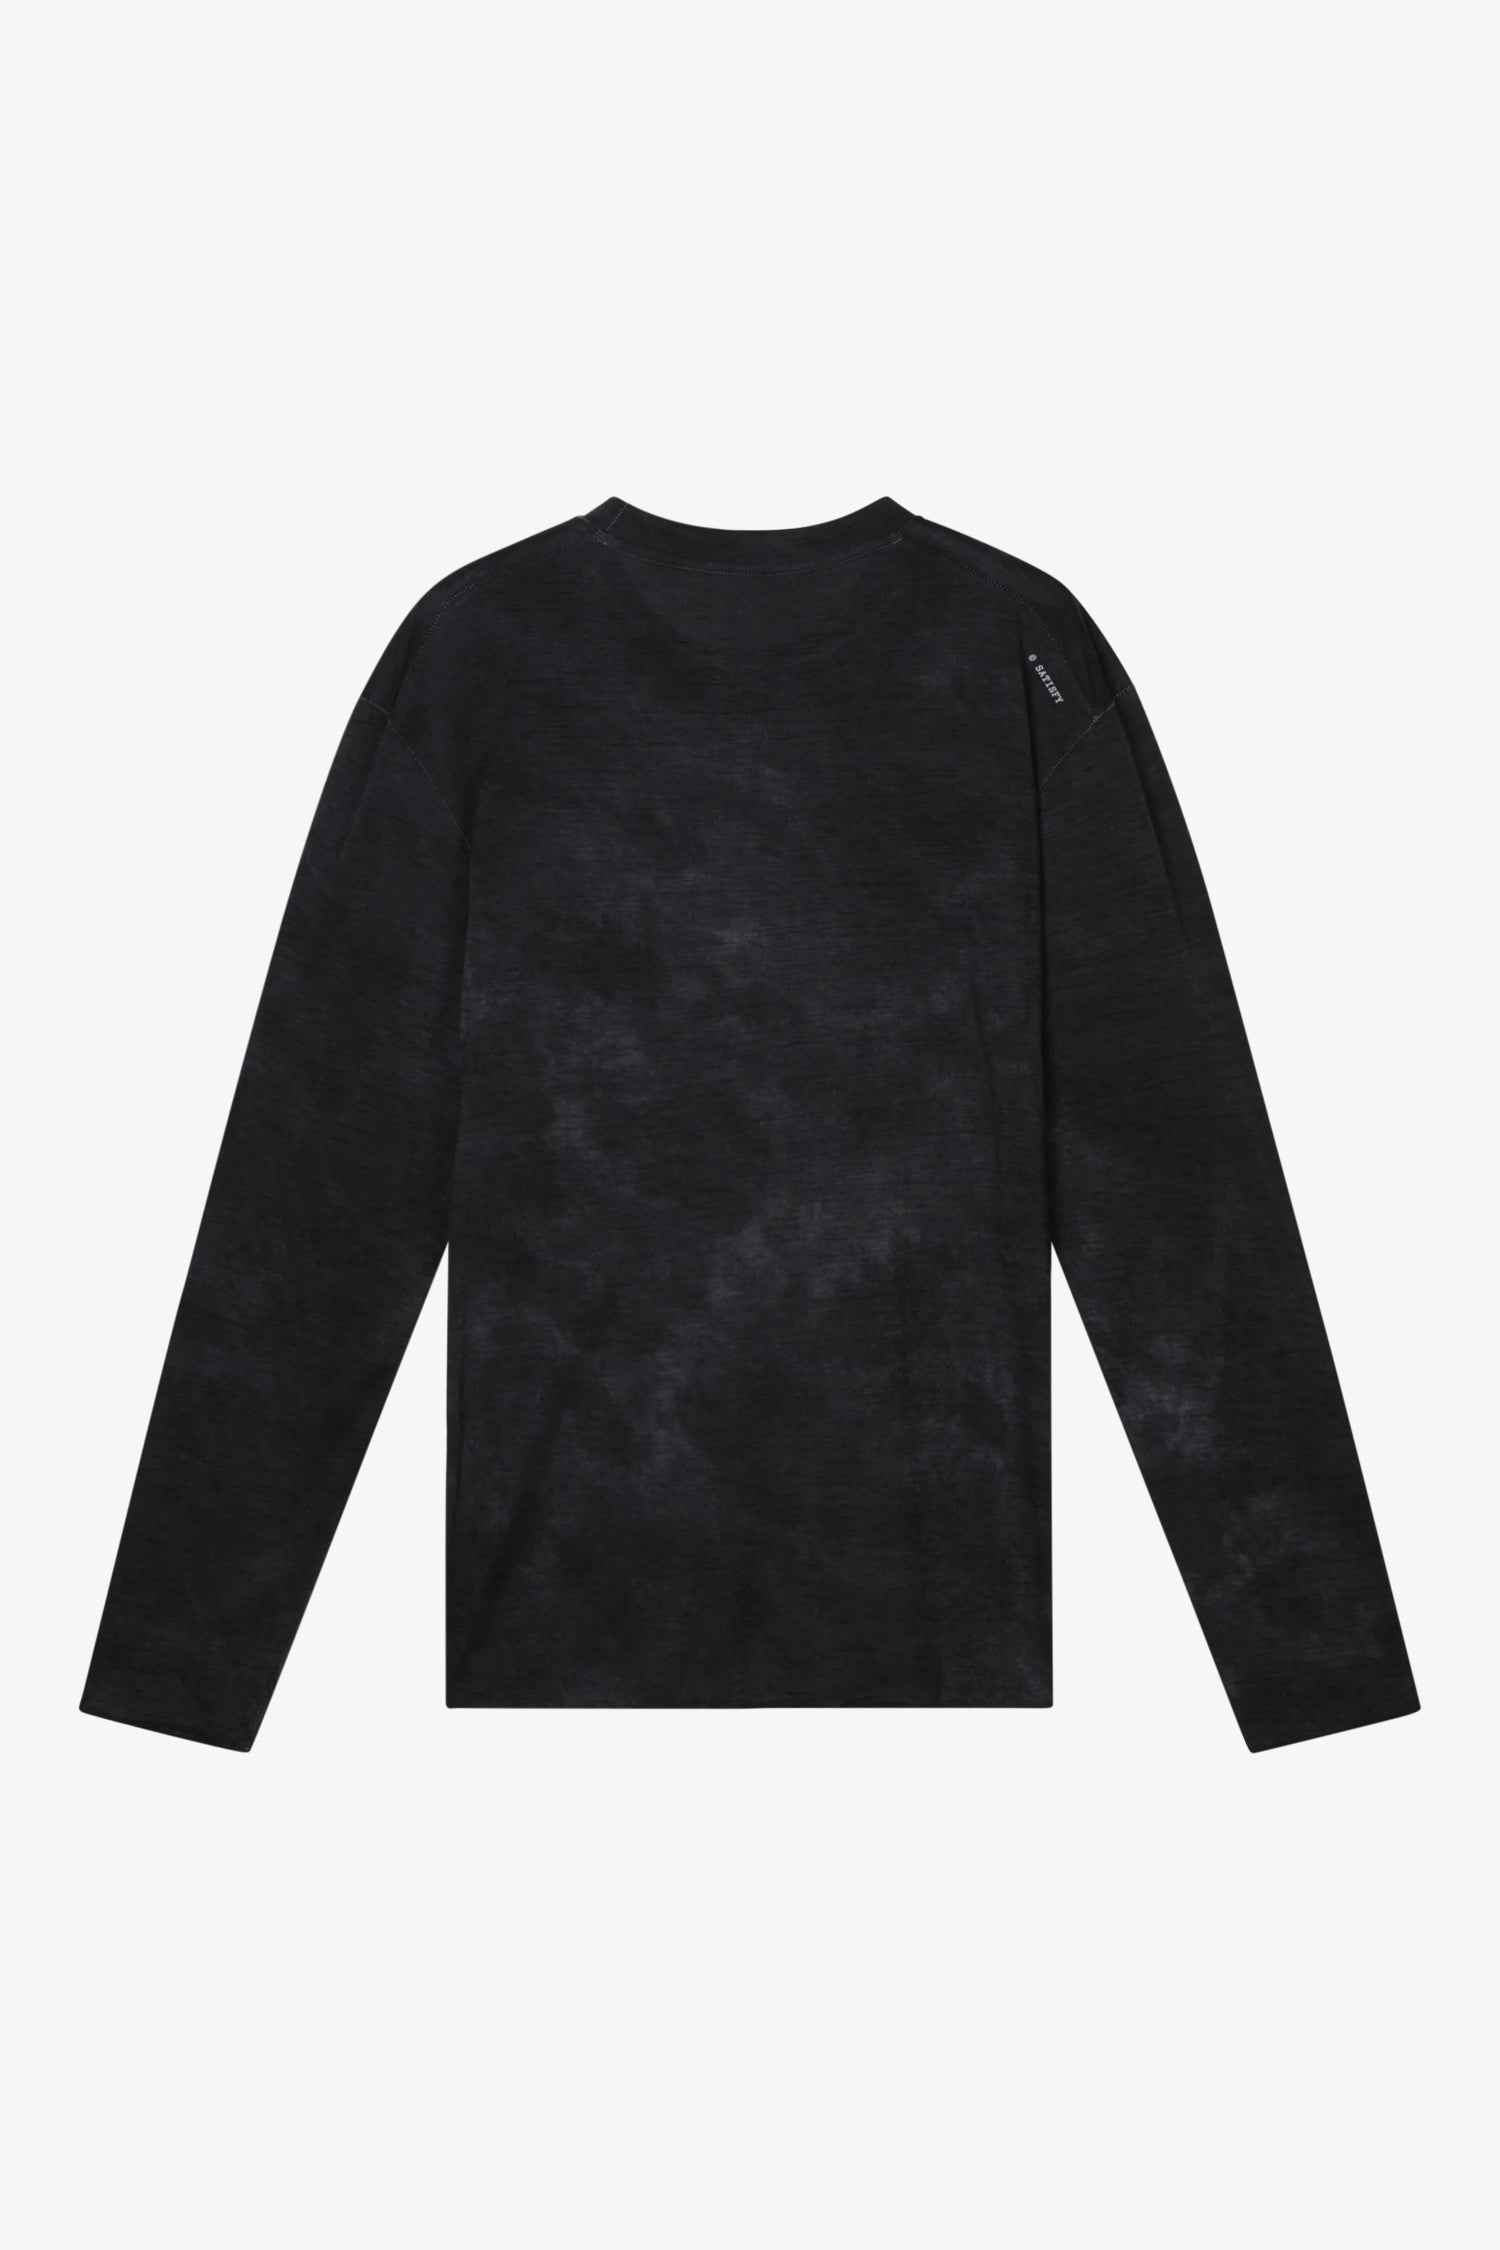 Cloud Merino Long Sleeve T-Shirt- Selectshop FRAME